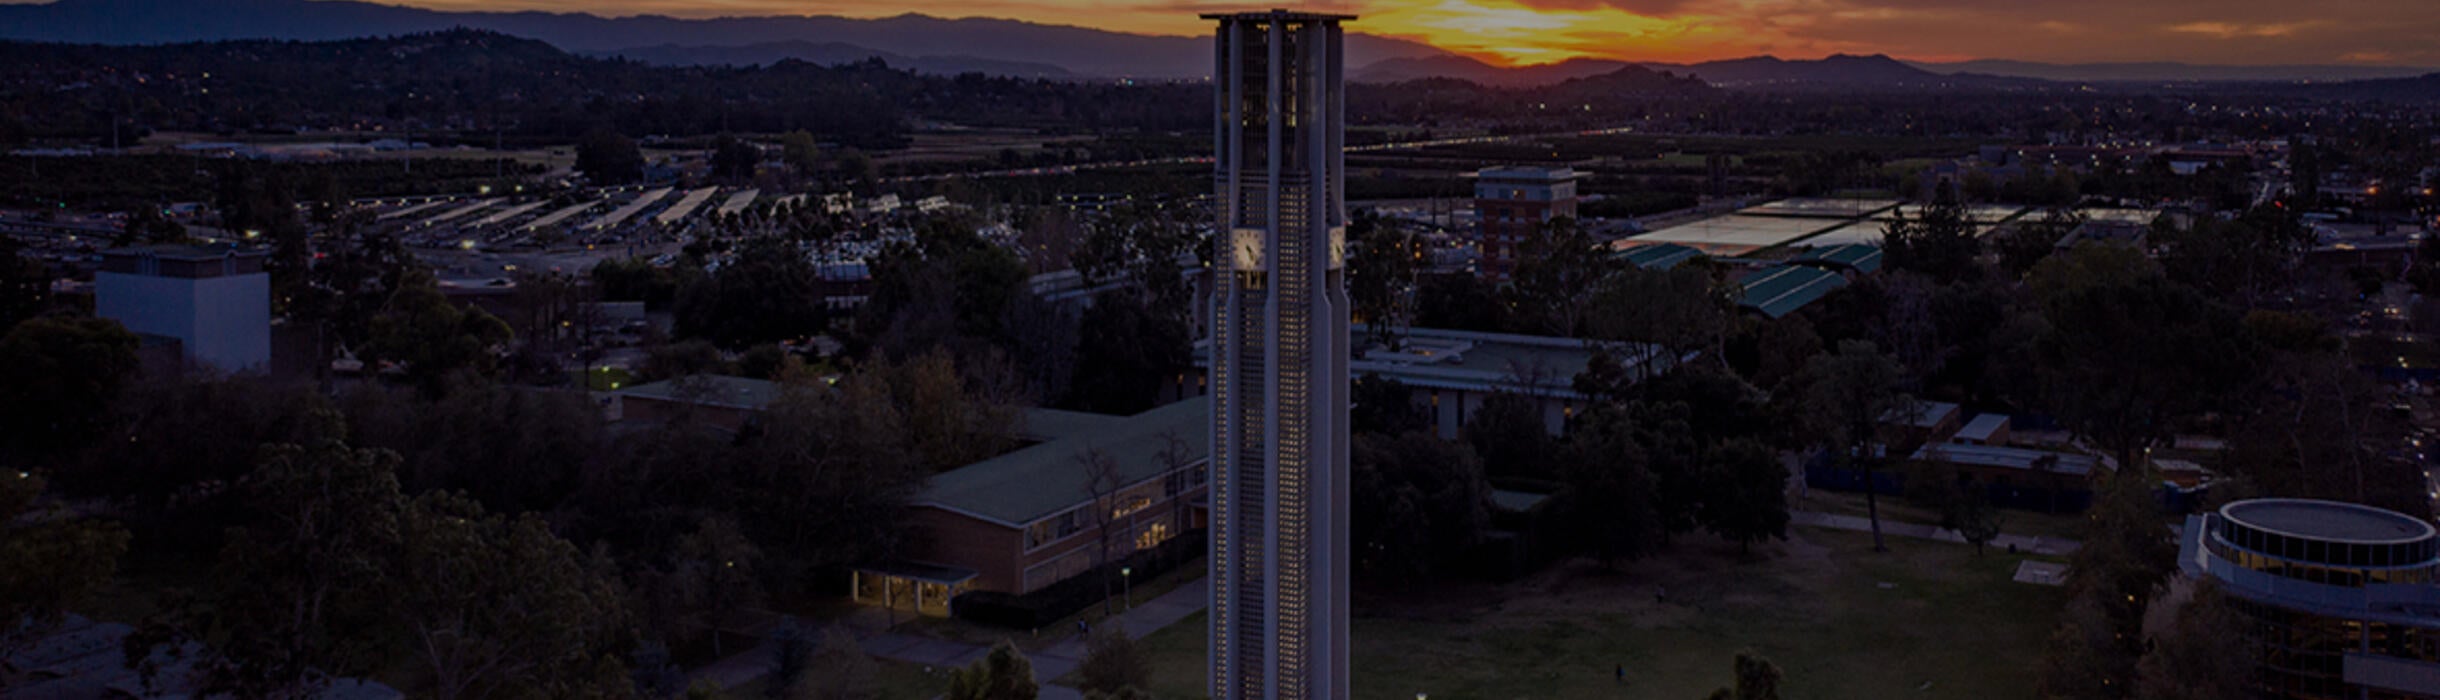 Beautiful Image of UC Riverside campus at Dawn